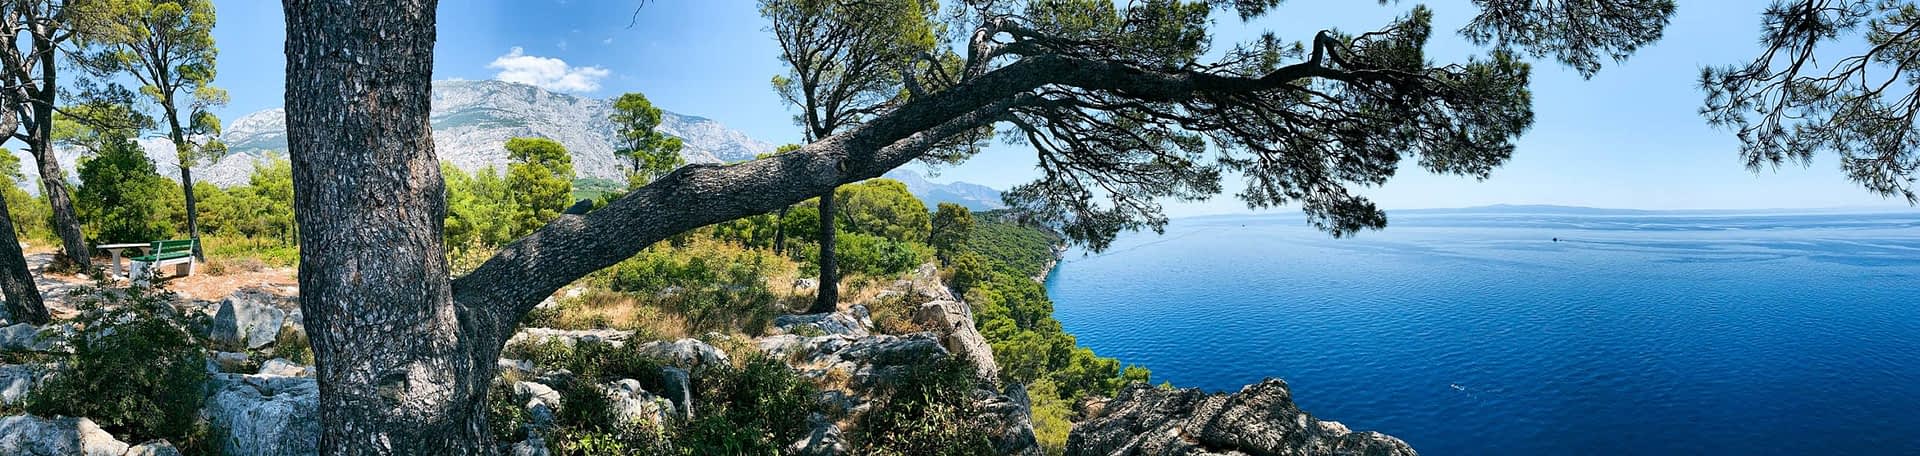 Panorama Natur Kroatien